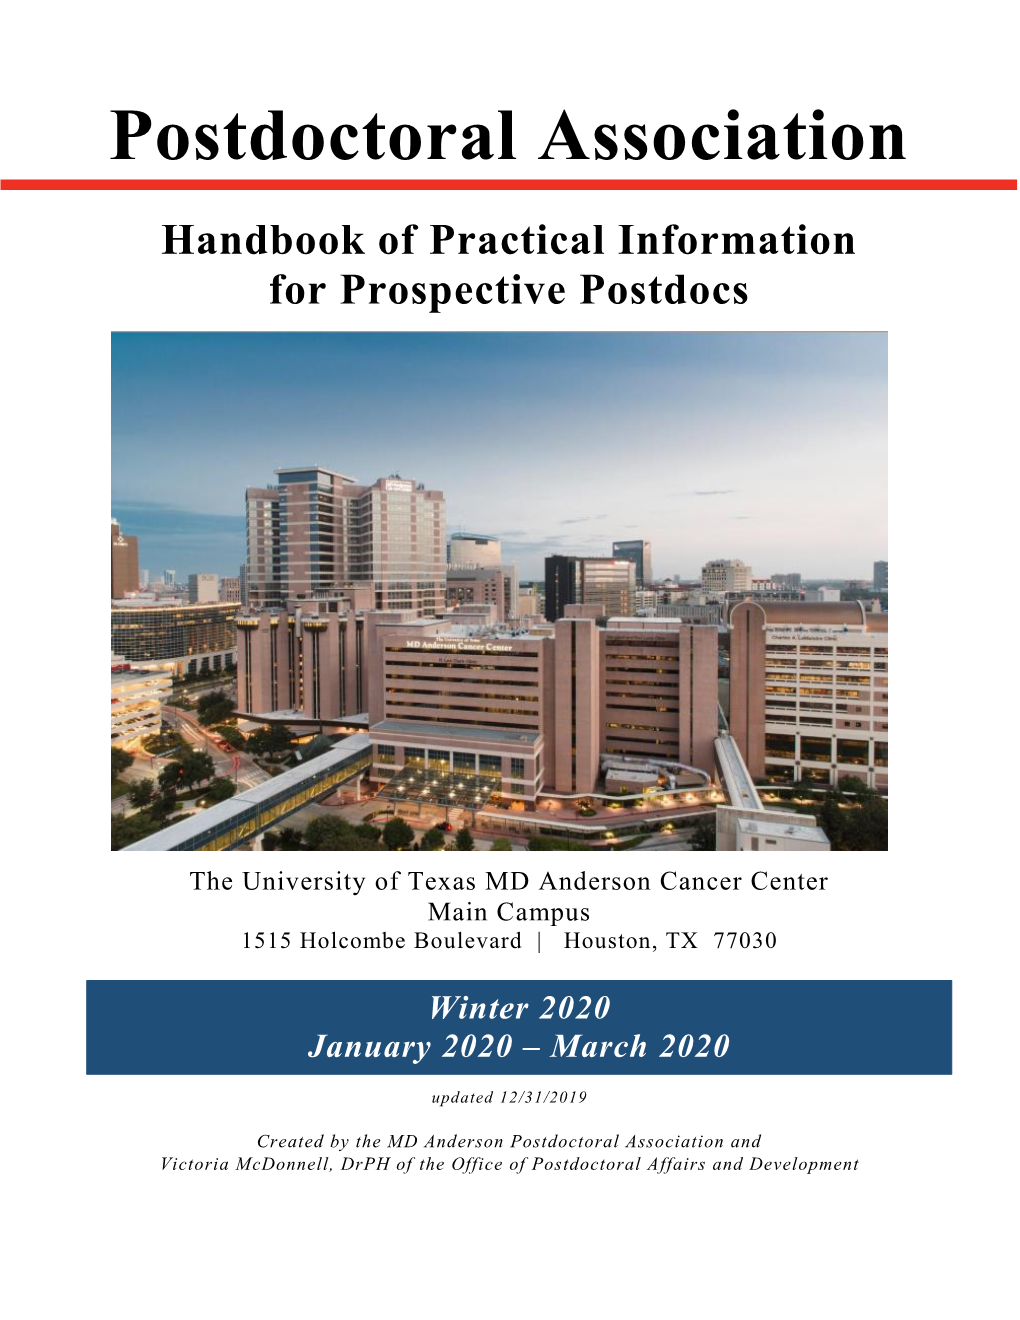 Handbook of Practical Information for Prospective Postdocs